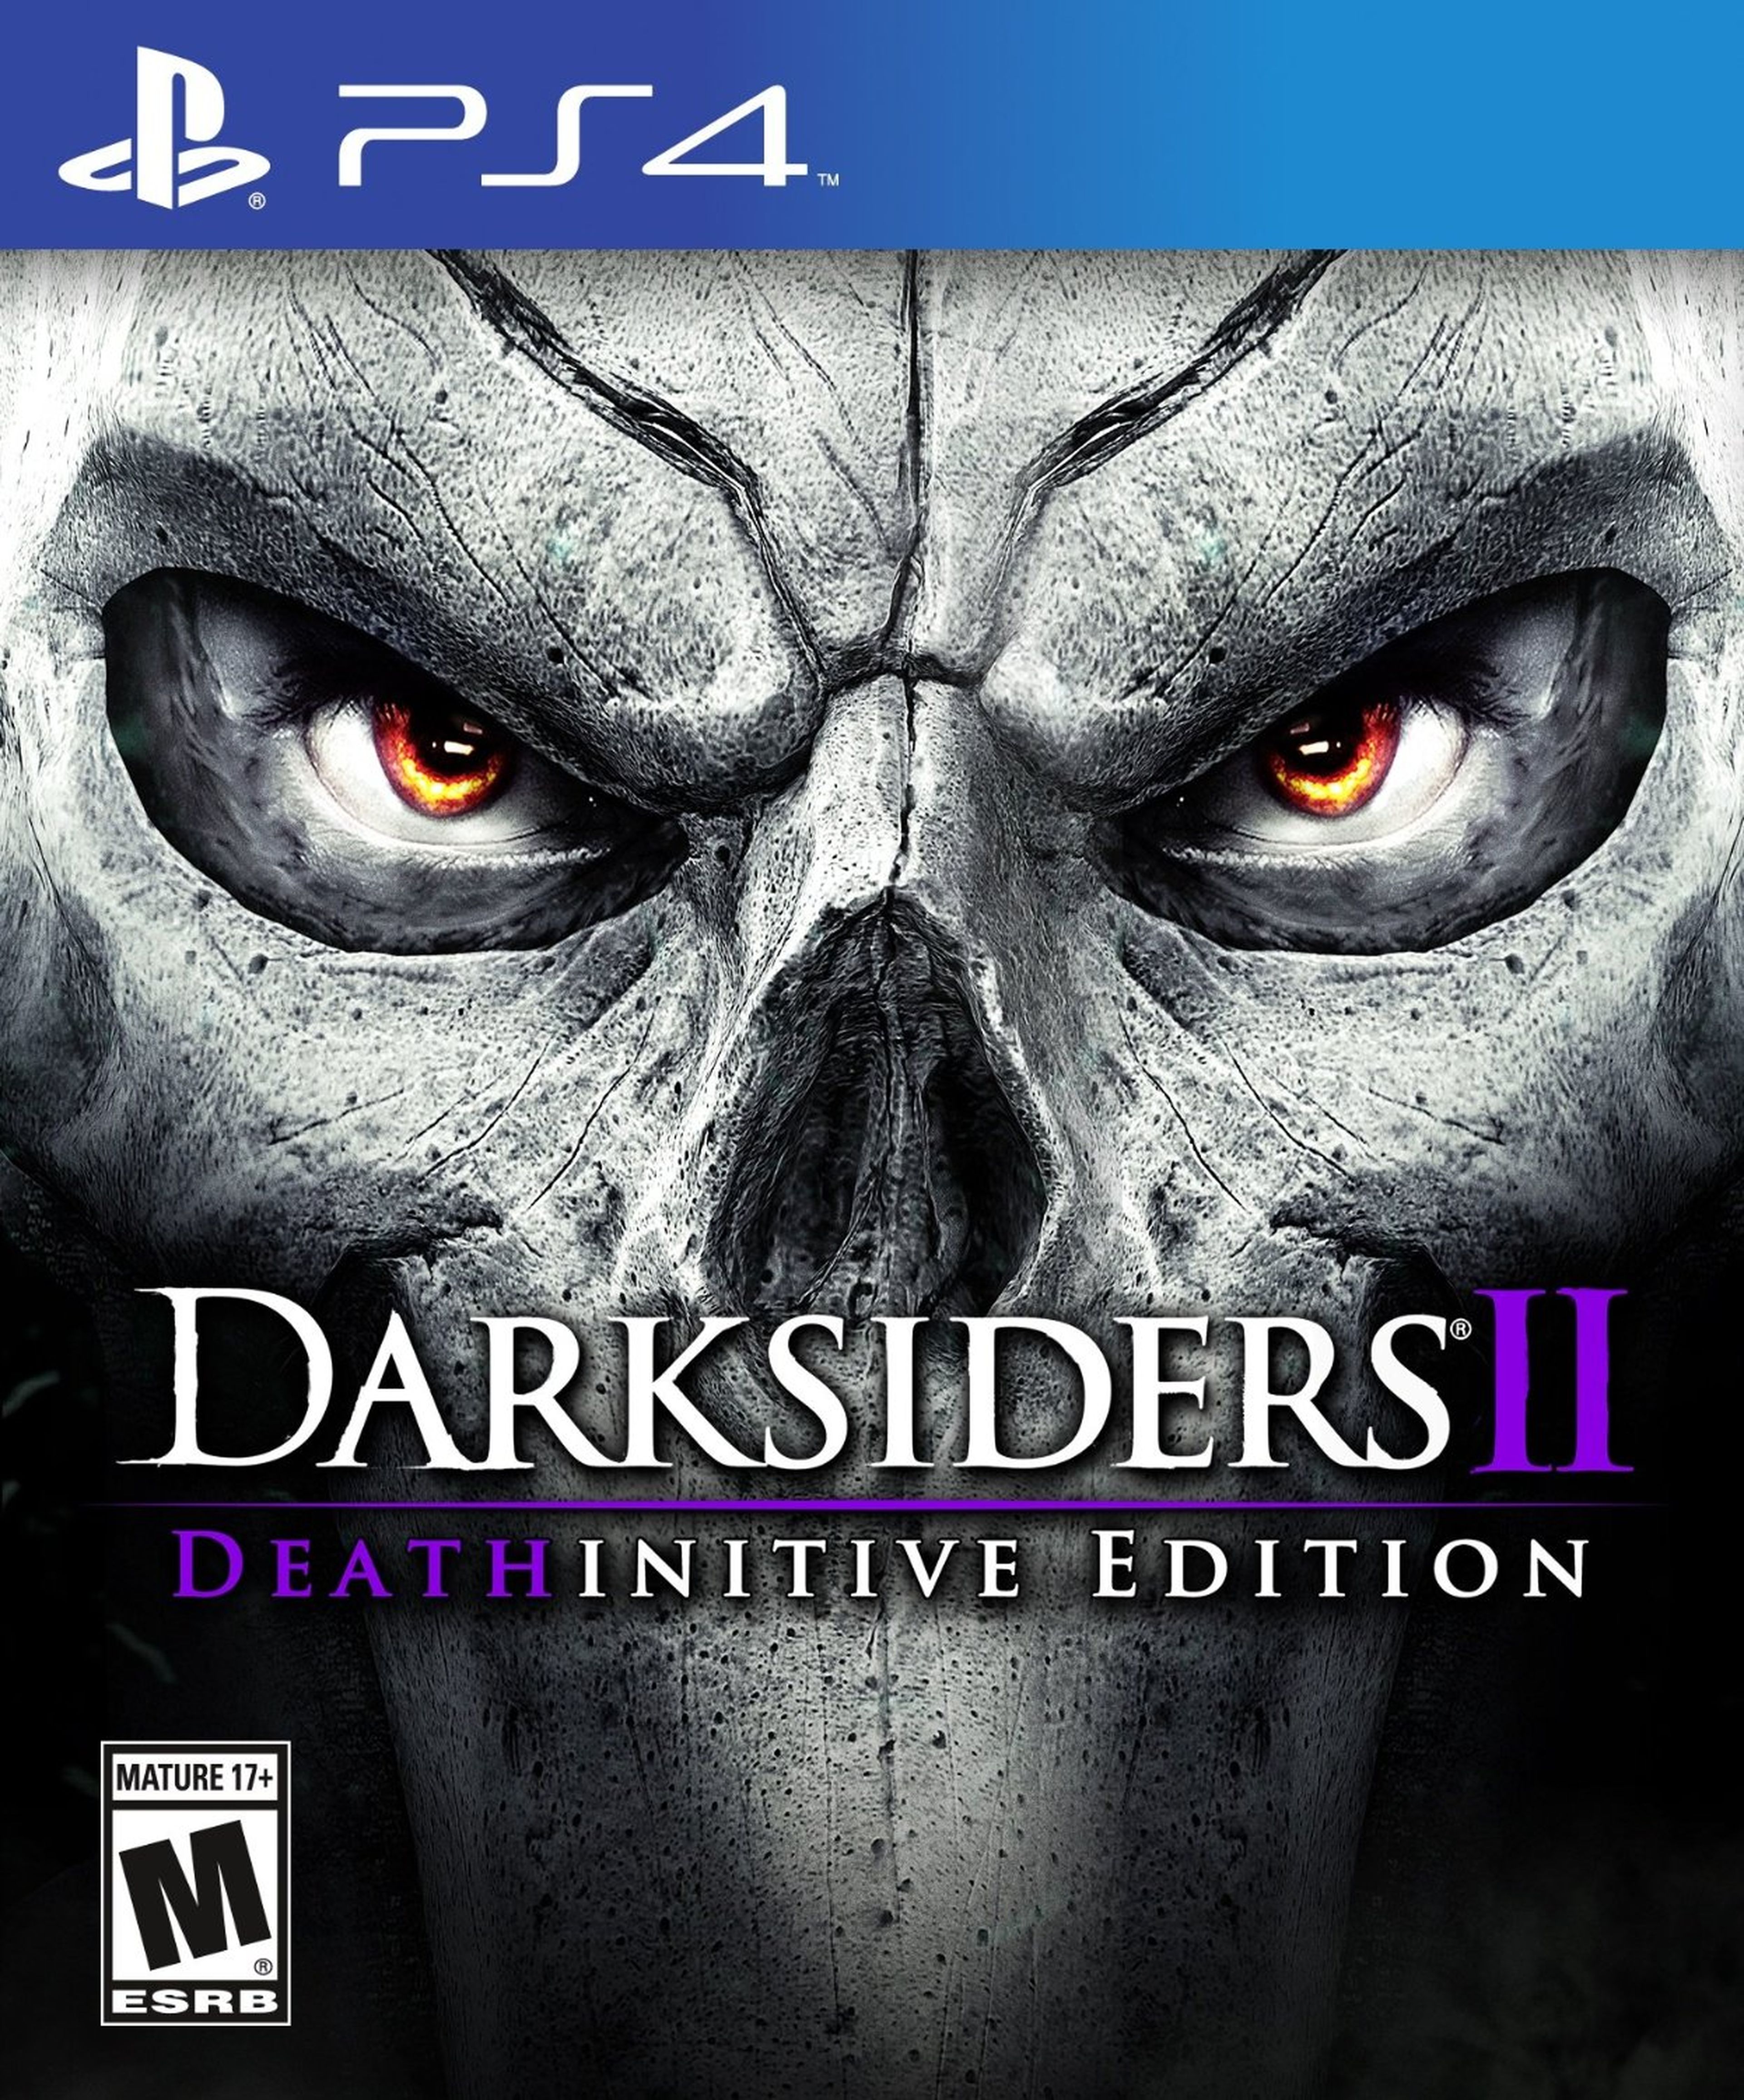 Darksiders 2 Deathinitive Edition, carátula oficial de PS4